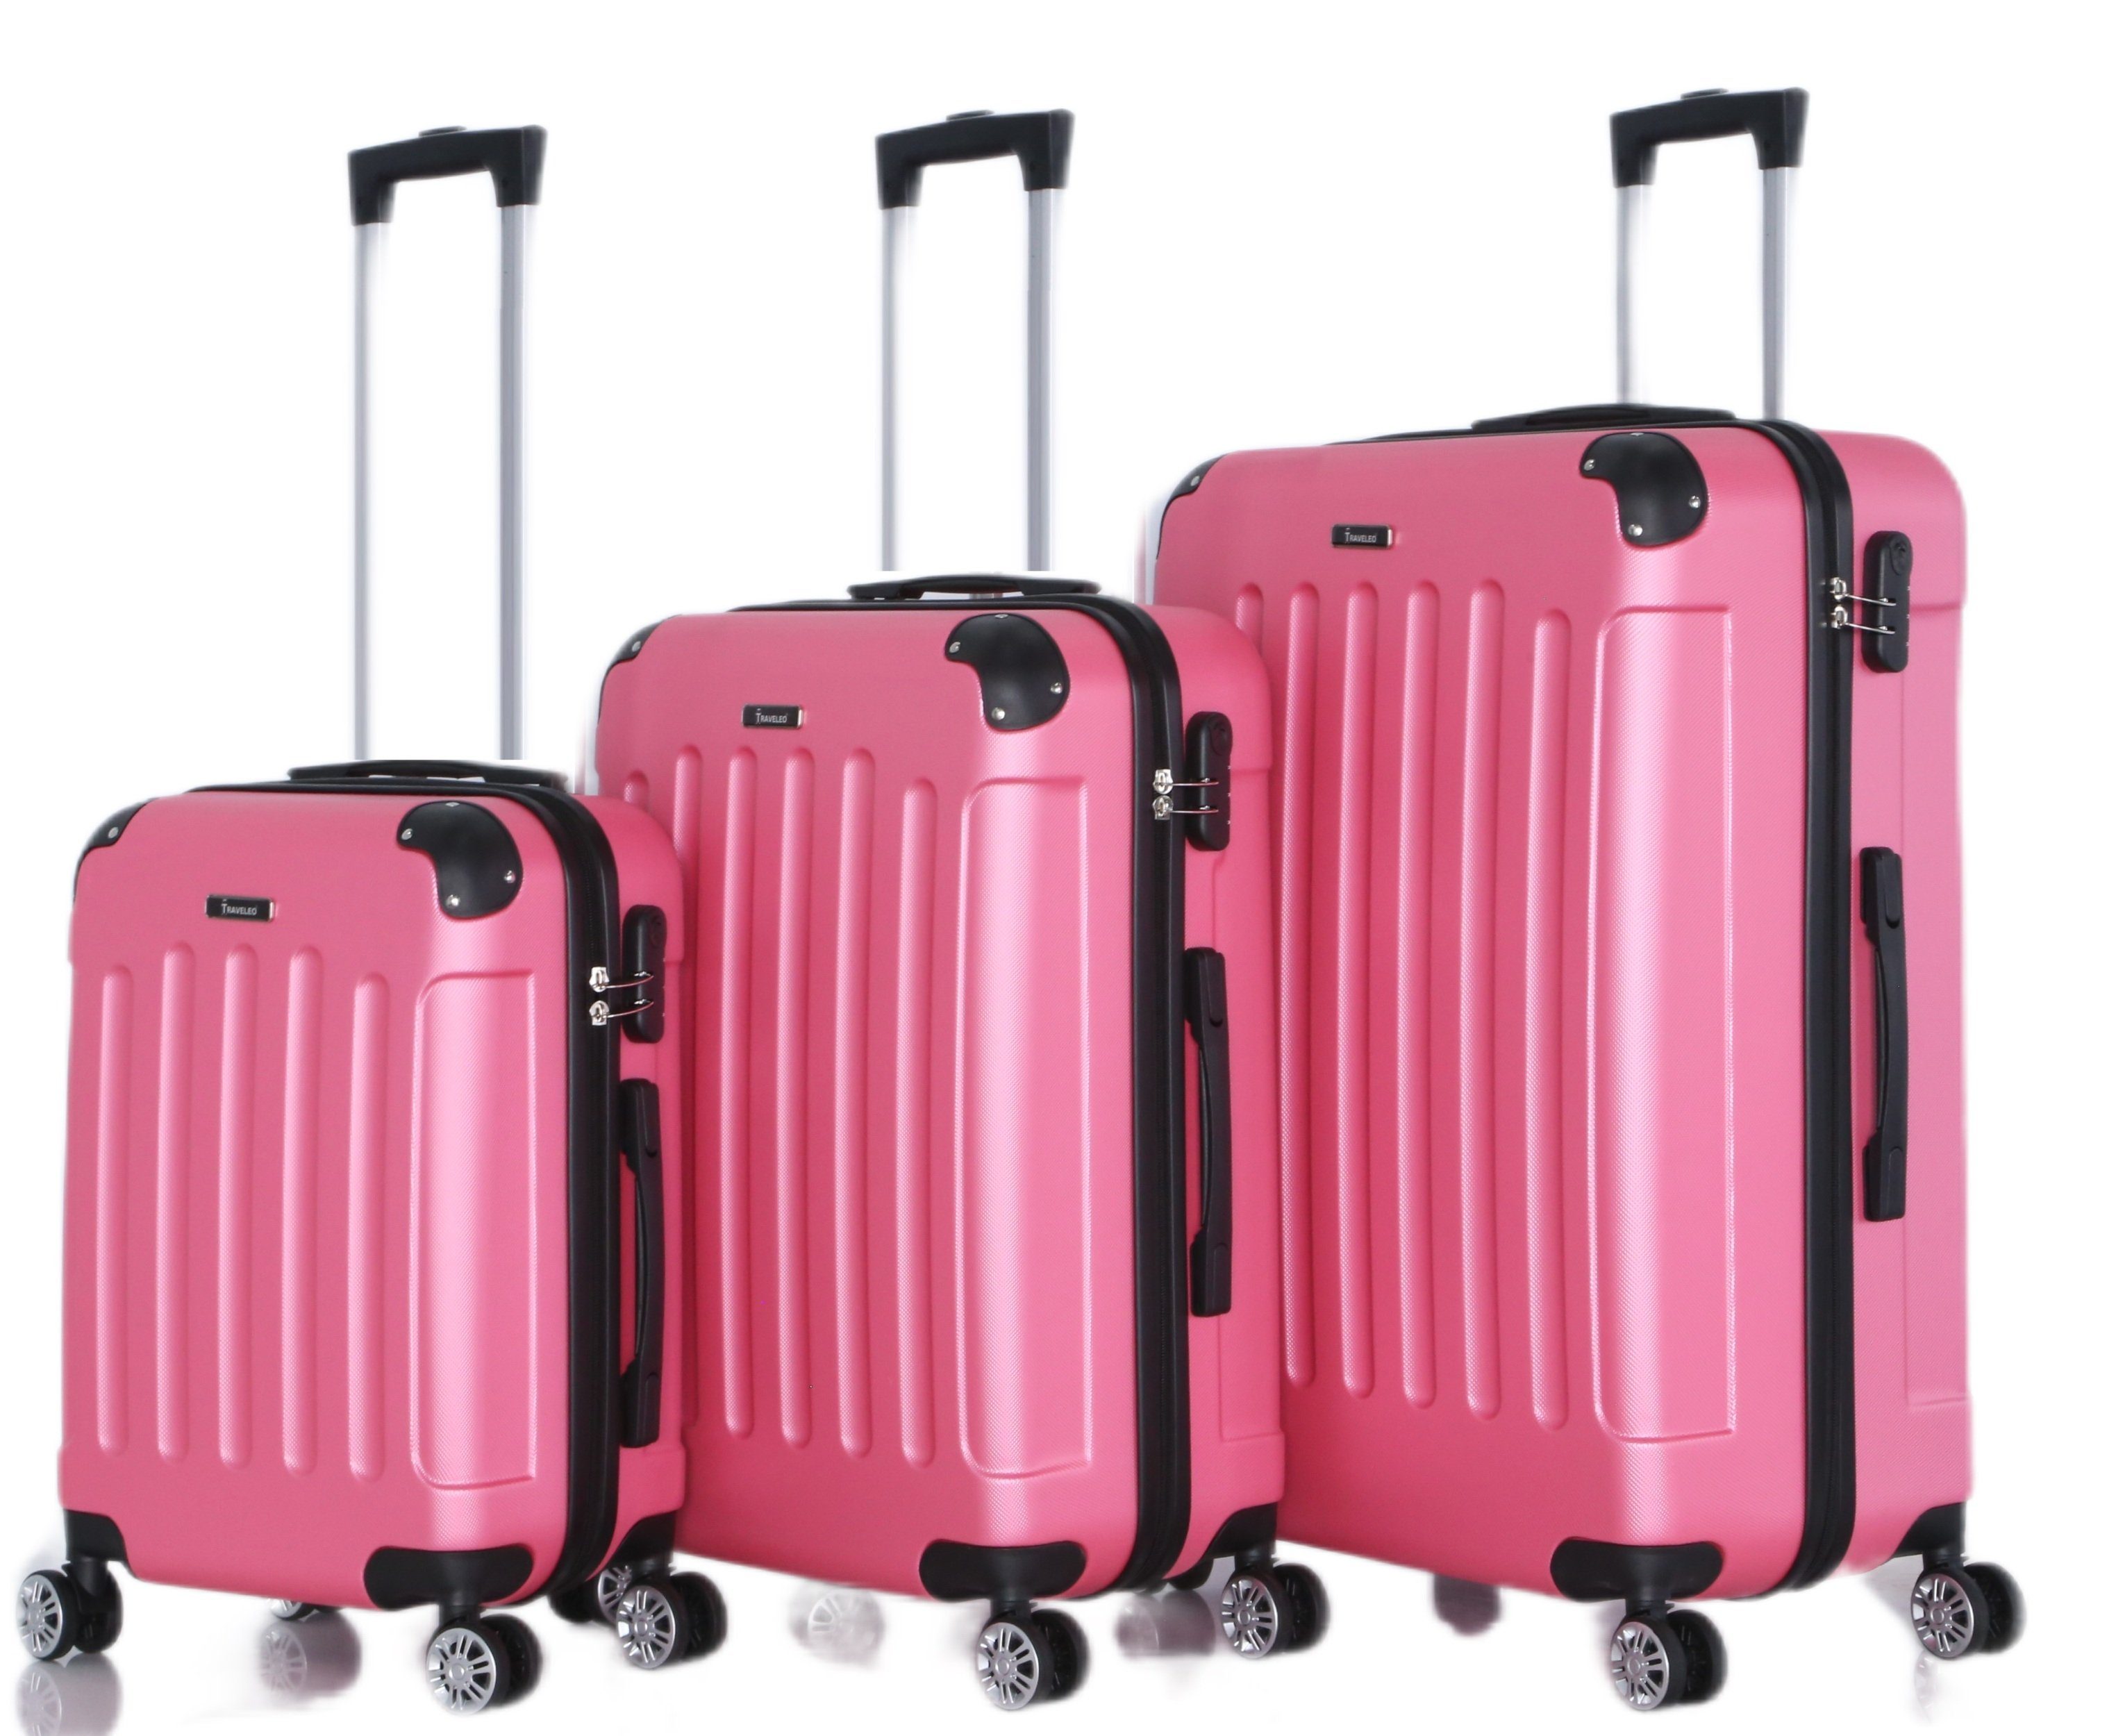 Rungassi Kofferset Hartschalenkoffer Trolley Reisekoffer Koffer Set Rungassi pink ABS01 | Trolley-Sets